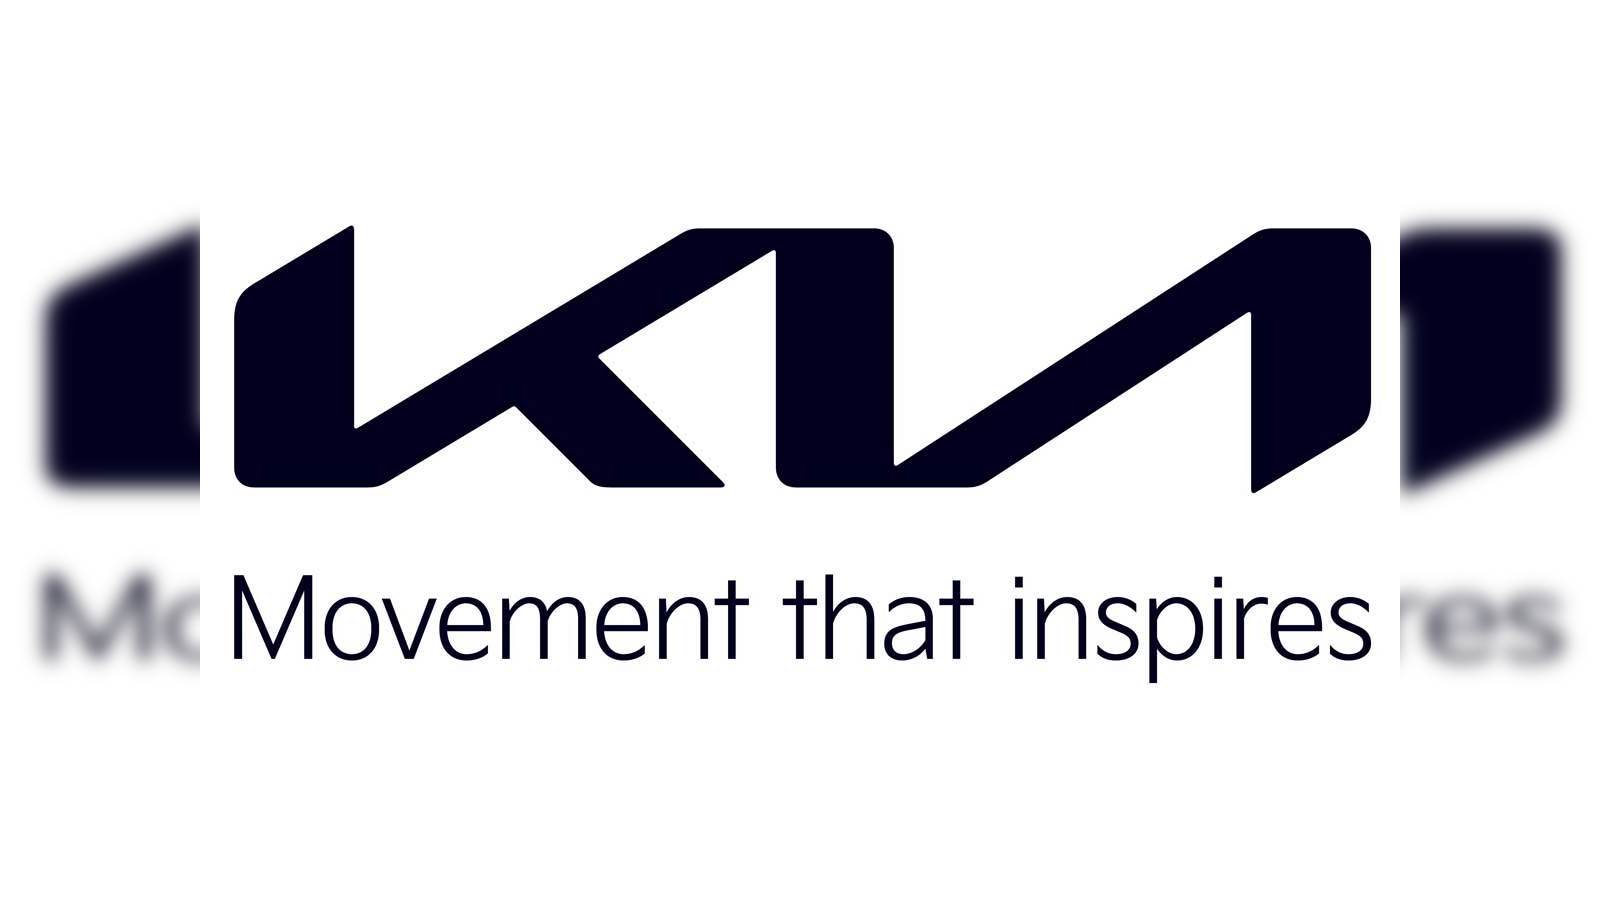 Kia Motors Corporation unveils new logo and brand slogan - The